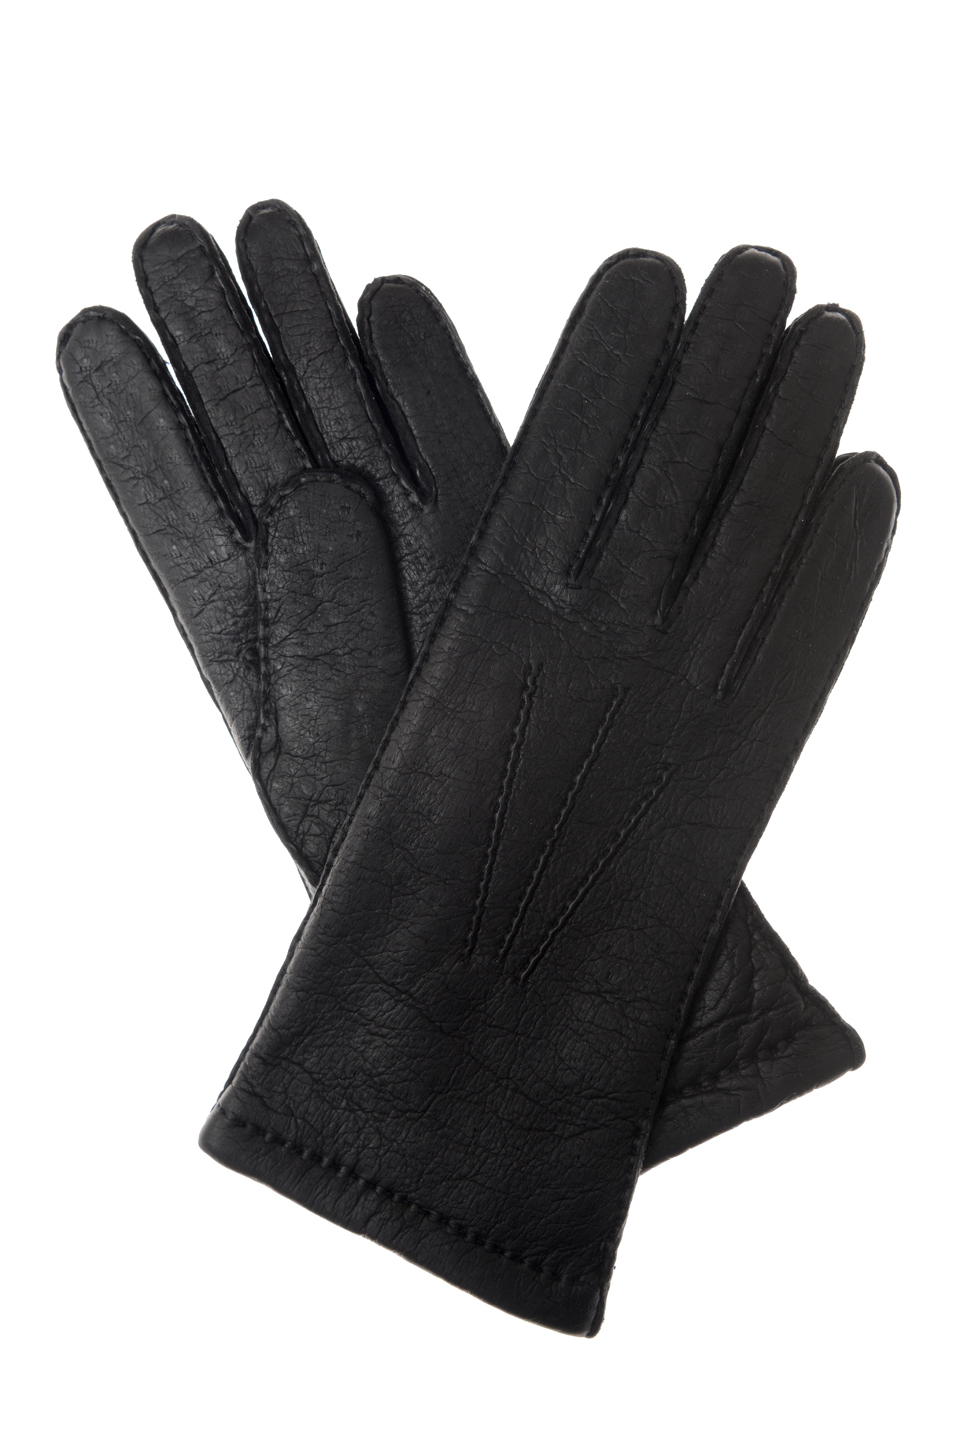 Lederhandschuh MANUFAKTUR Rico Wappler - Damen Lederhandschuhe aus Peccary  Leder mit Aufnaht schwarz | Handschuhe